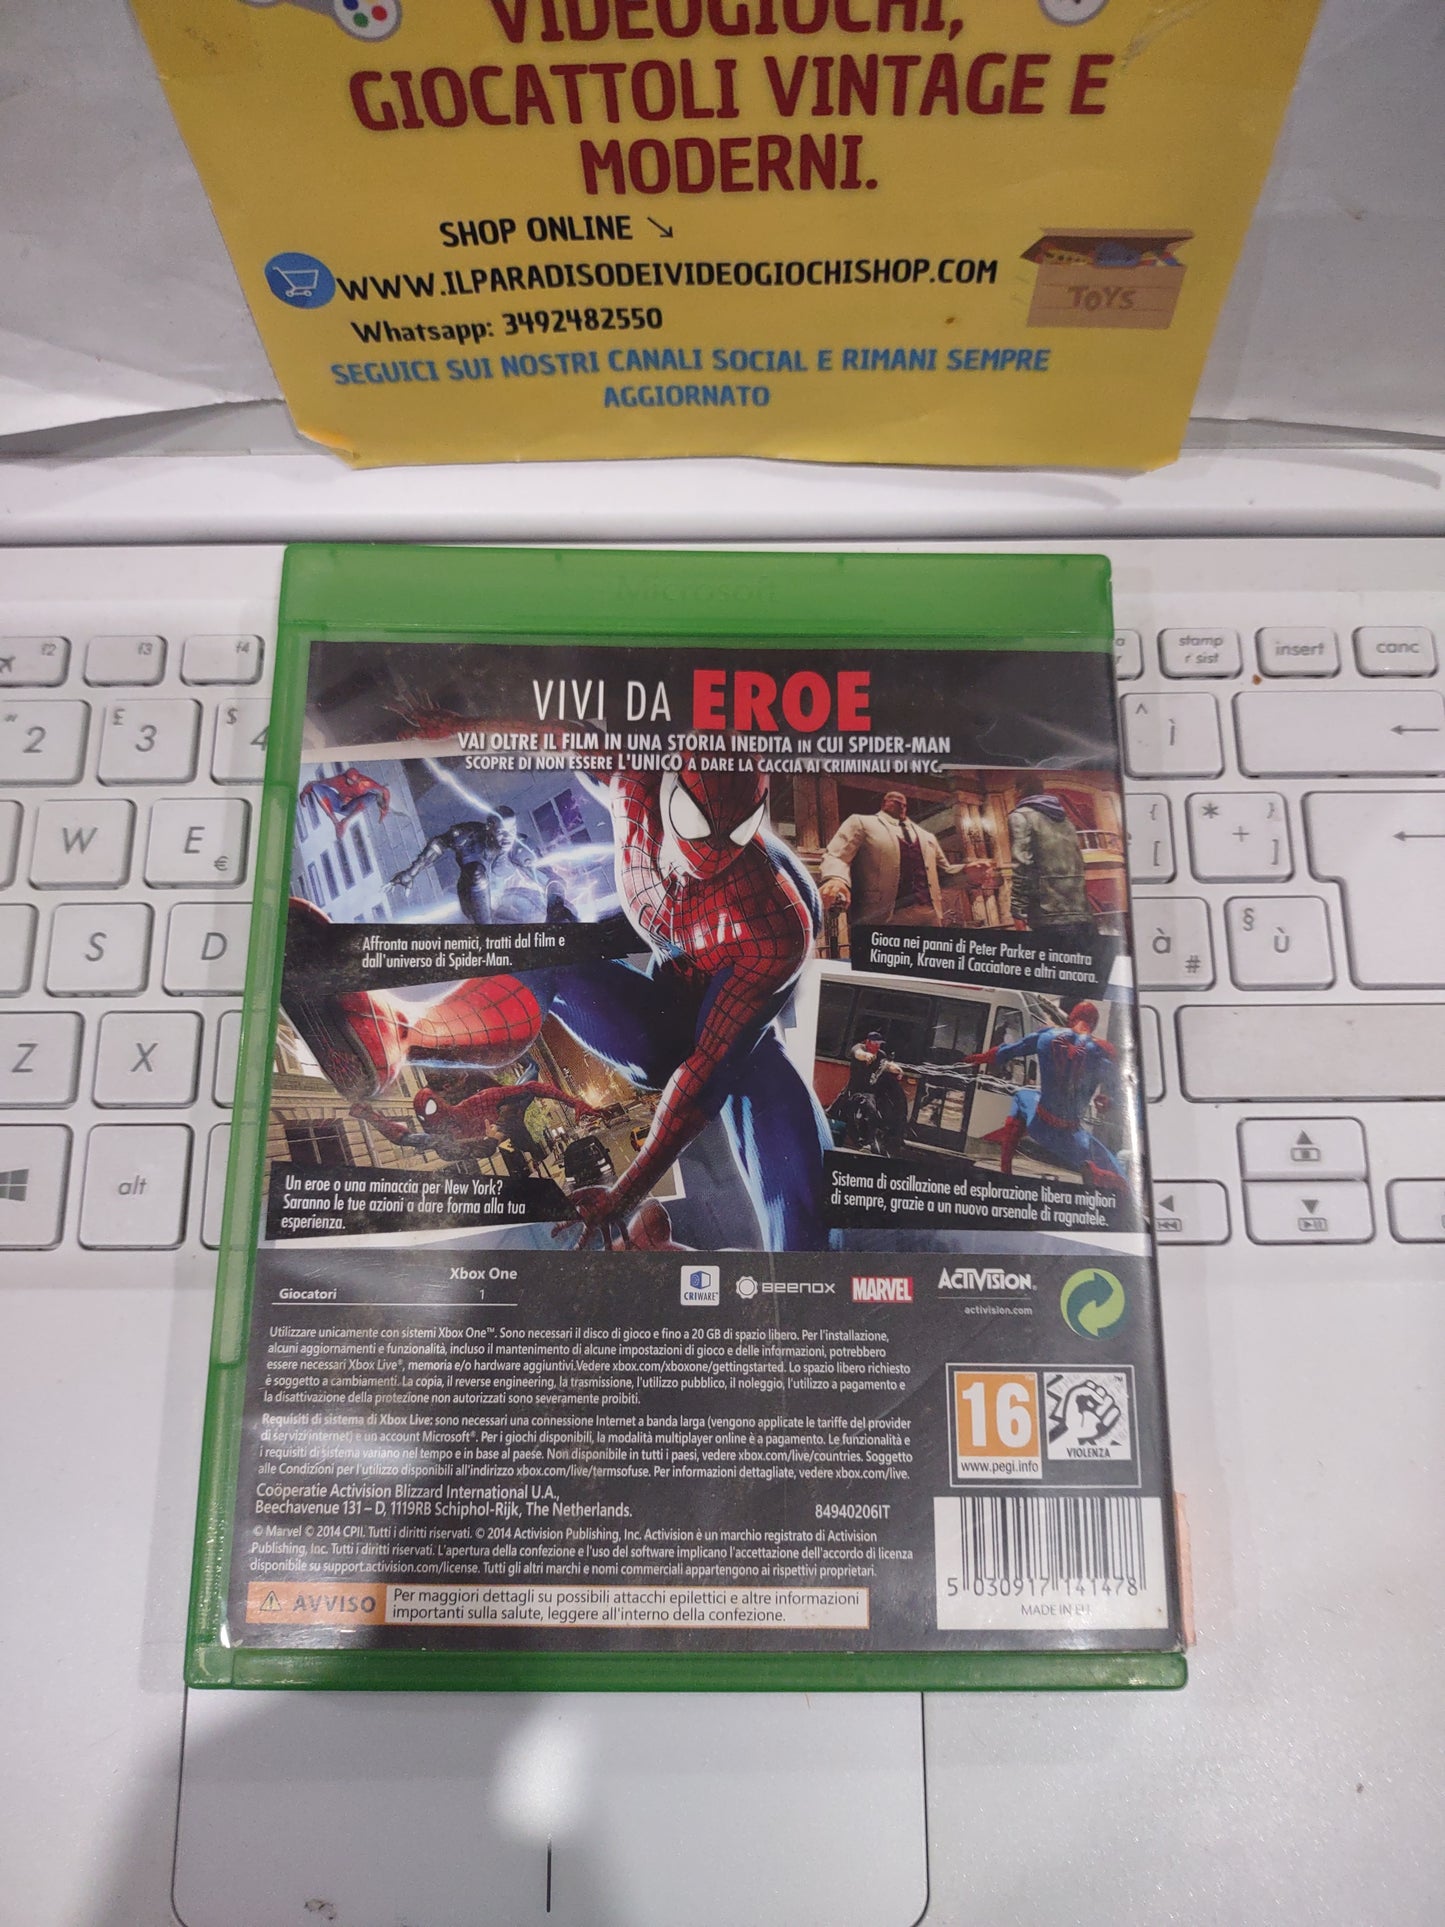 Gioco Xbox One the amazing spider-man 2 italiano